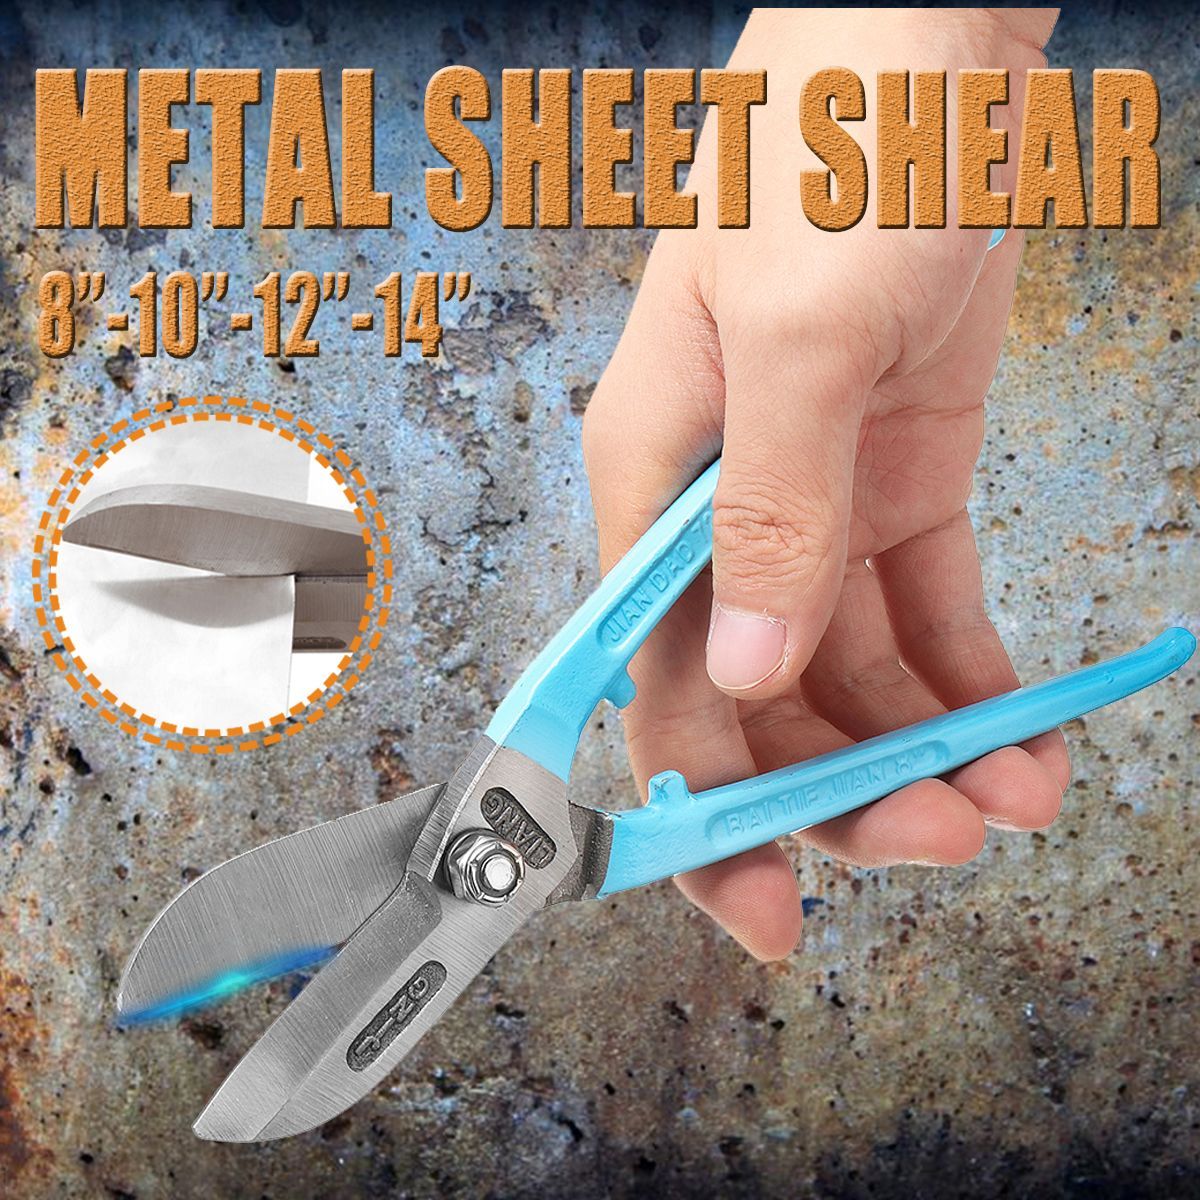 8101214-Inch-Straight-Tin-Snips-Shears-Metal-Aluminum-Tin-Cutter-for-Cutting-Aluminum-Thin-Metal-She-1351785